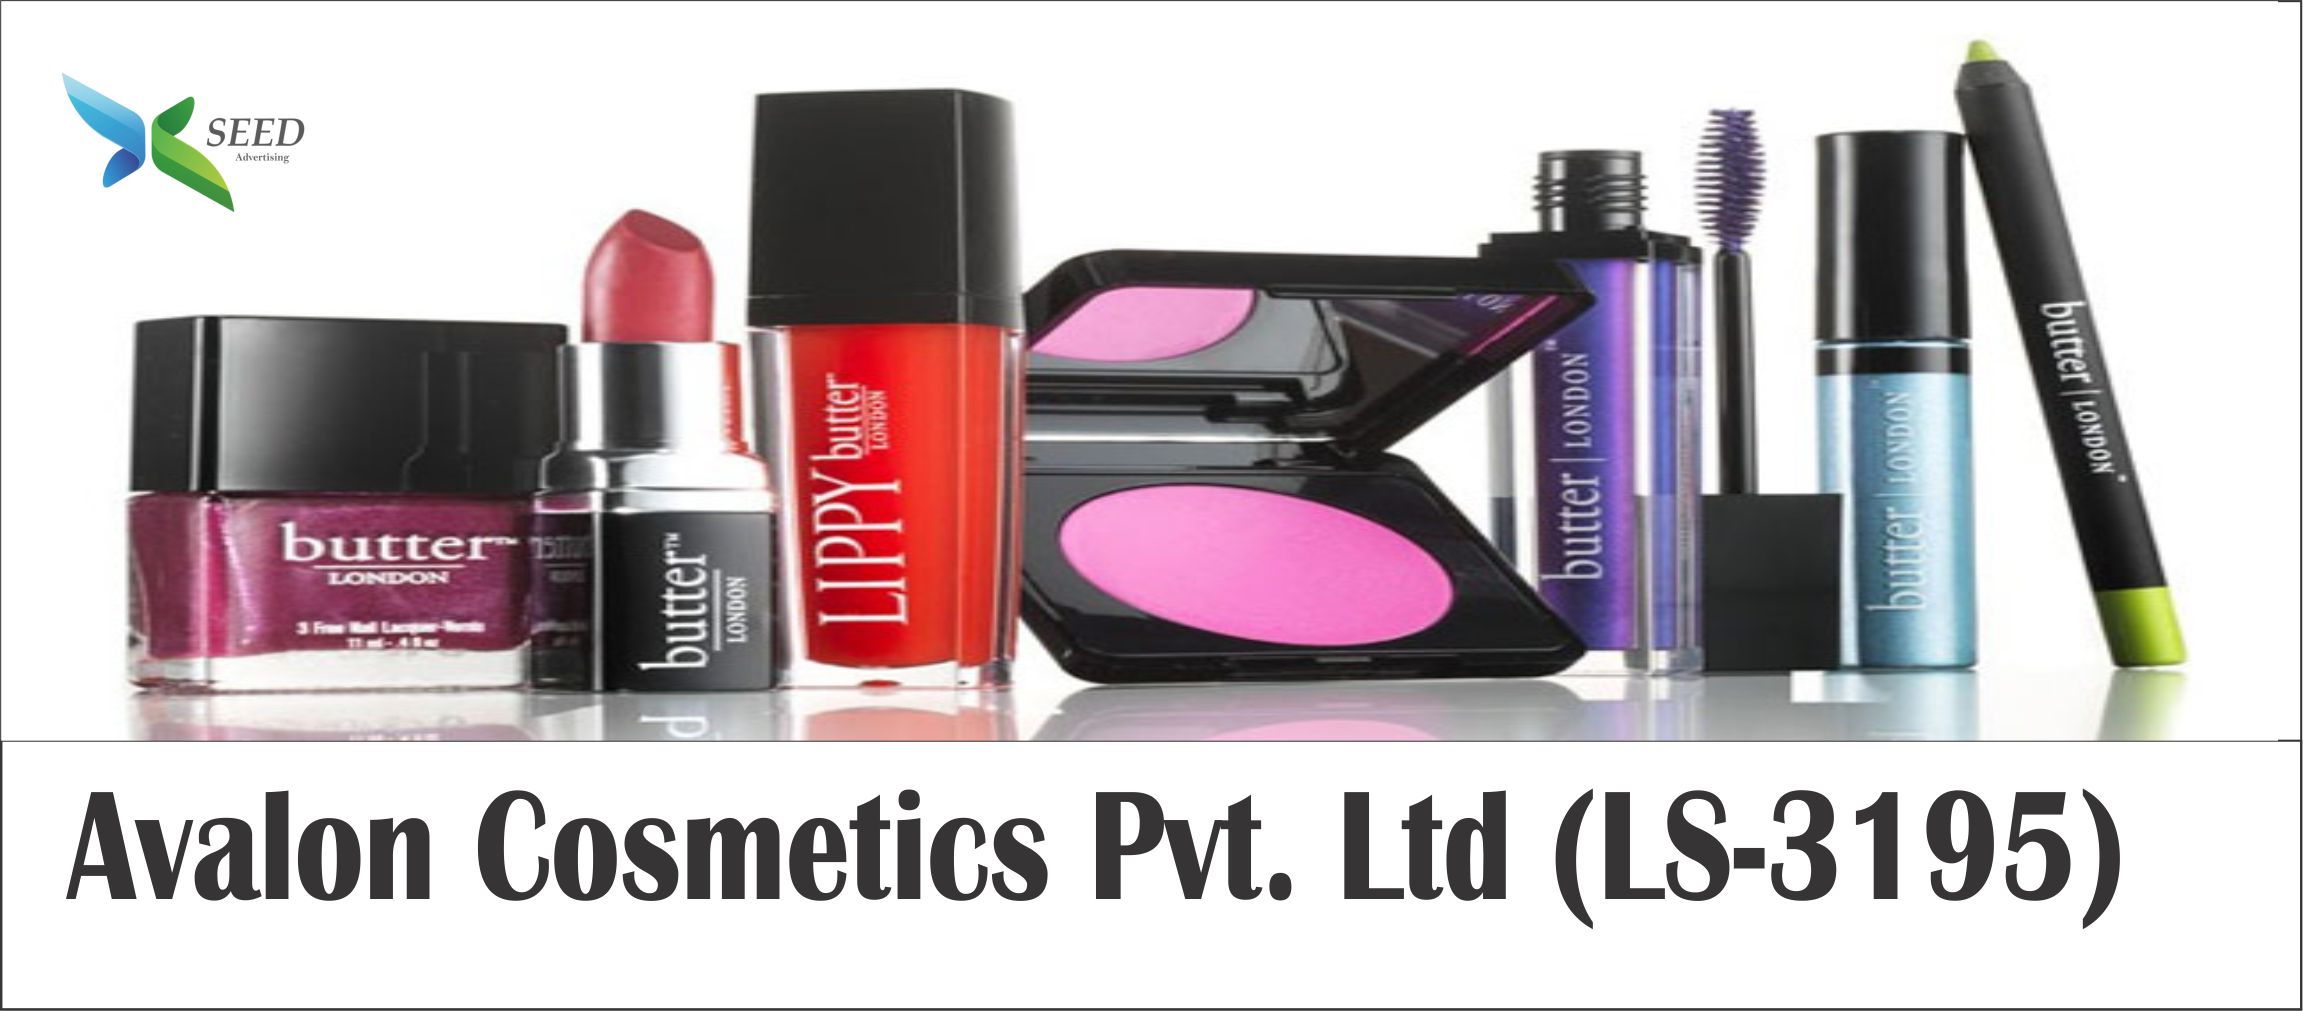 Avalon Cosmetics Pvt. Ltd